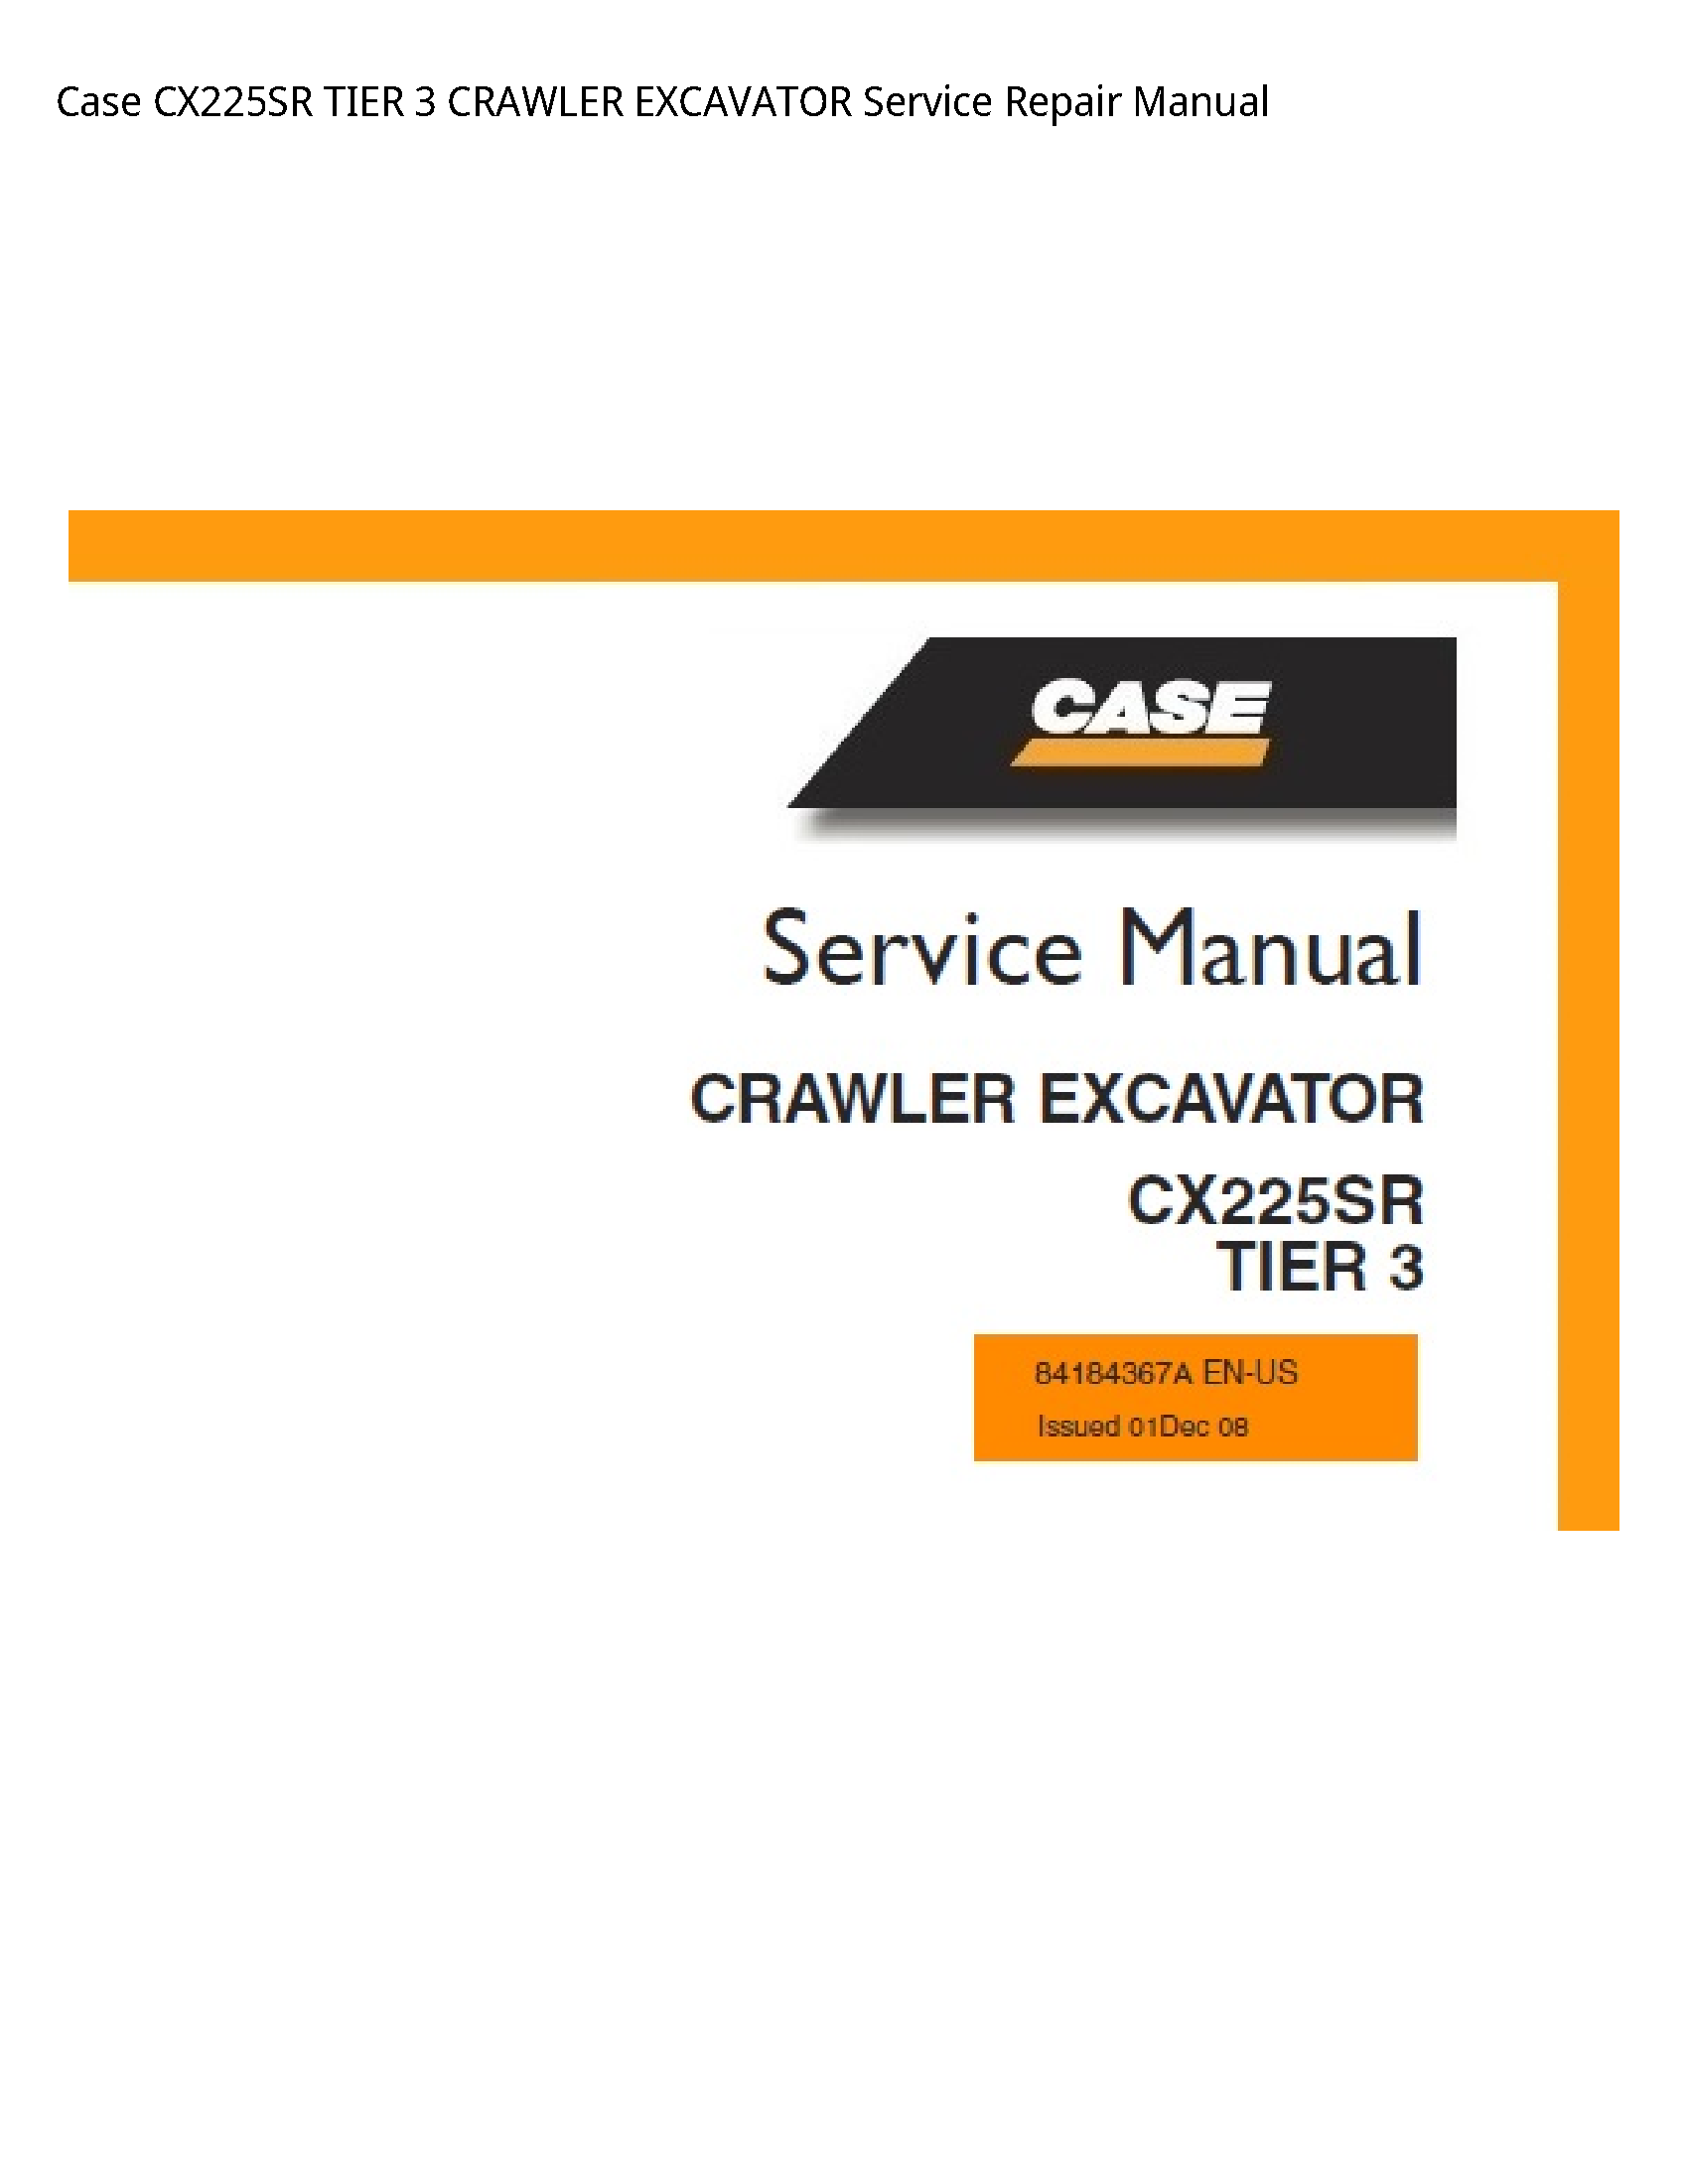 Case/Case IH CX225SR TIER CRAWLER EXCAVATOR manual